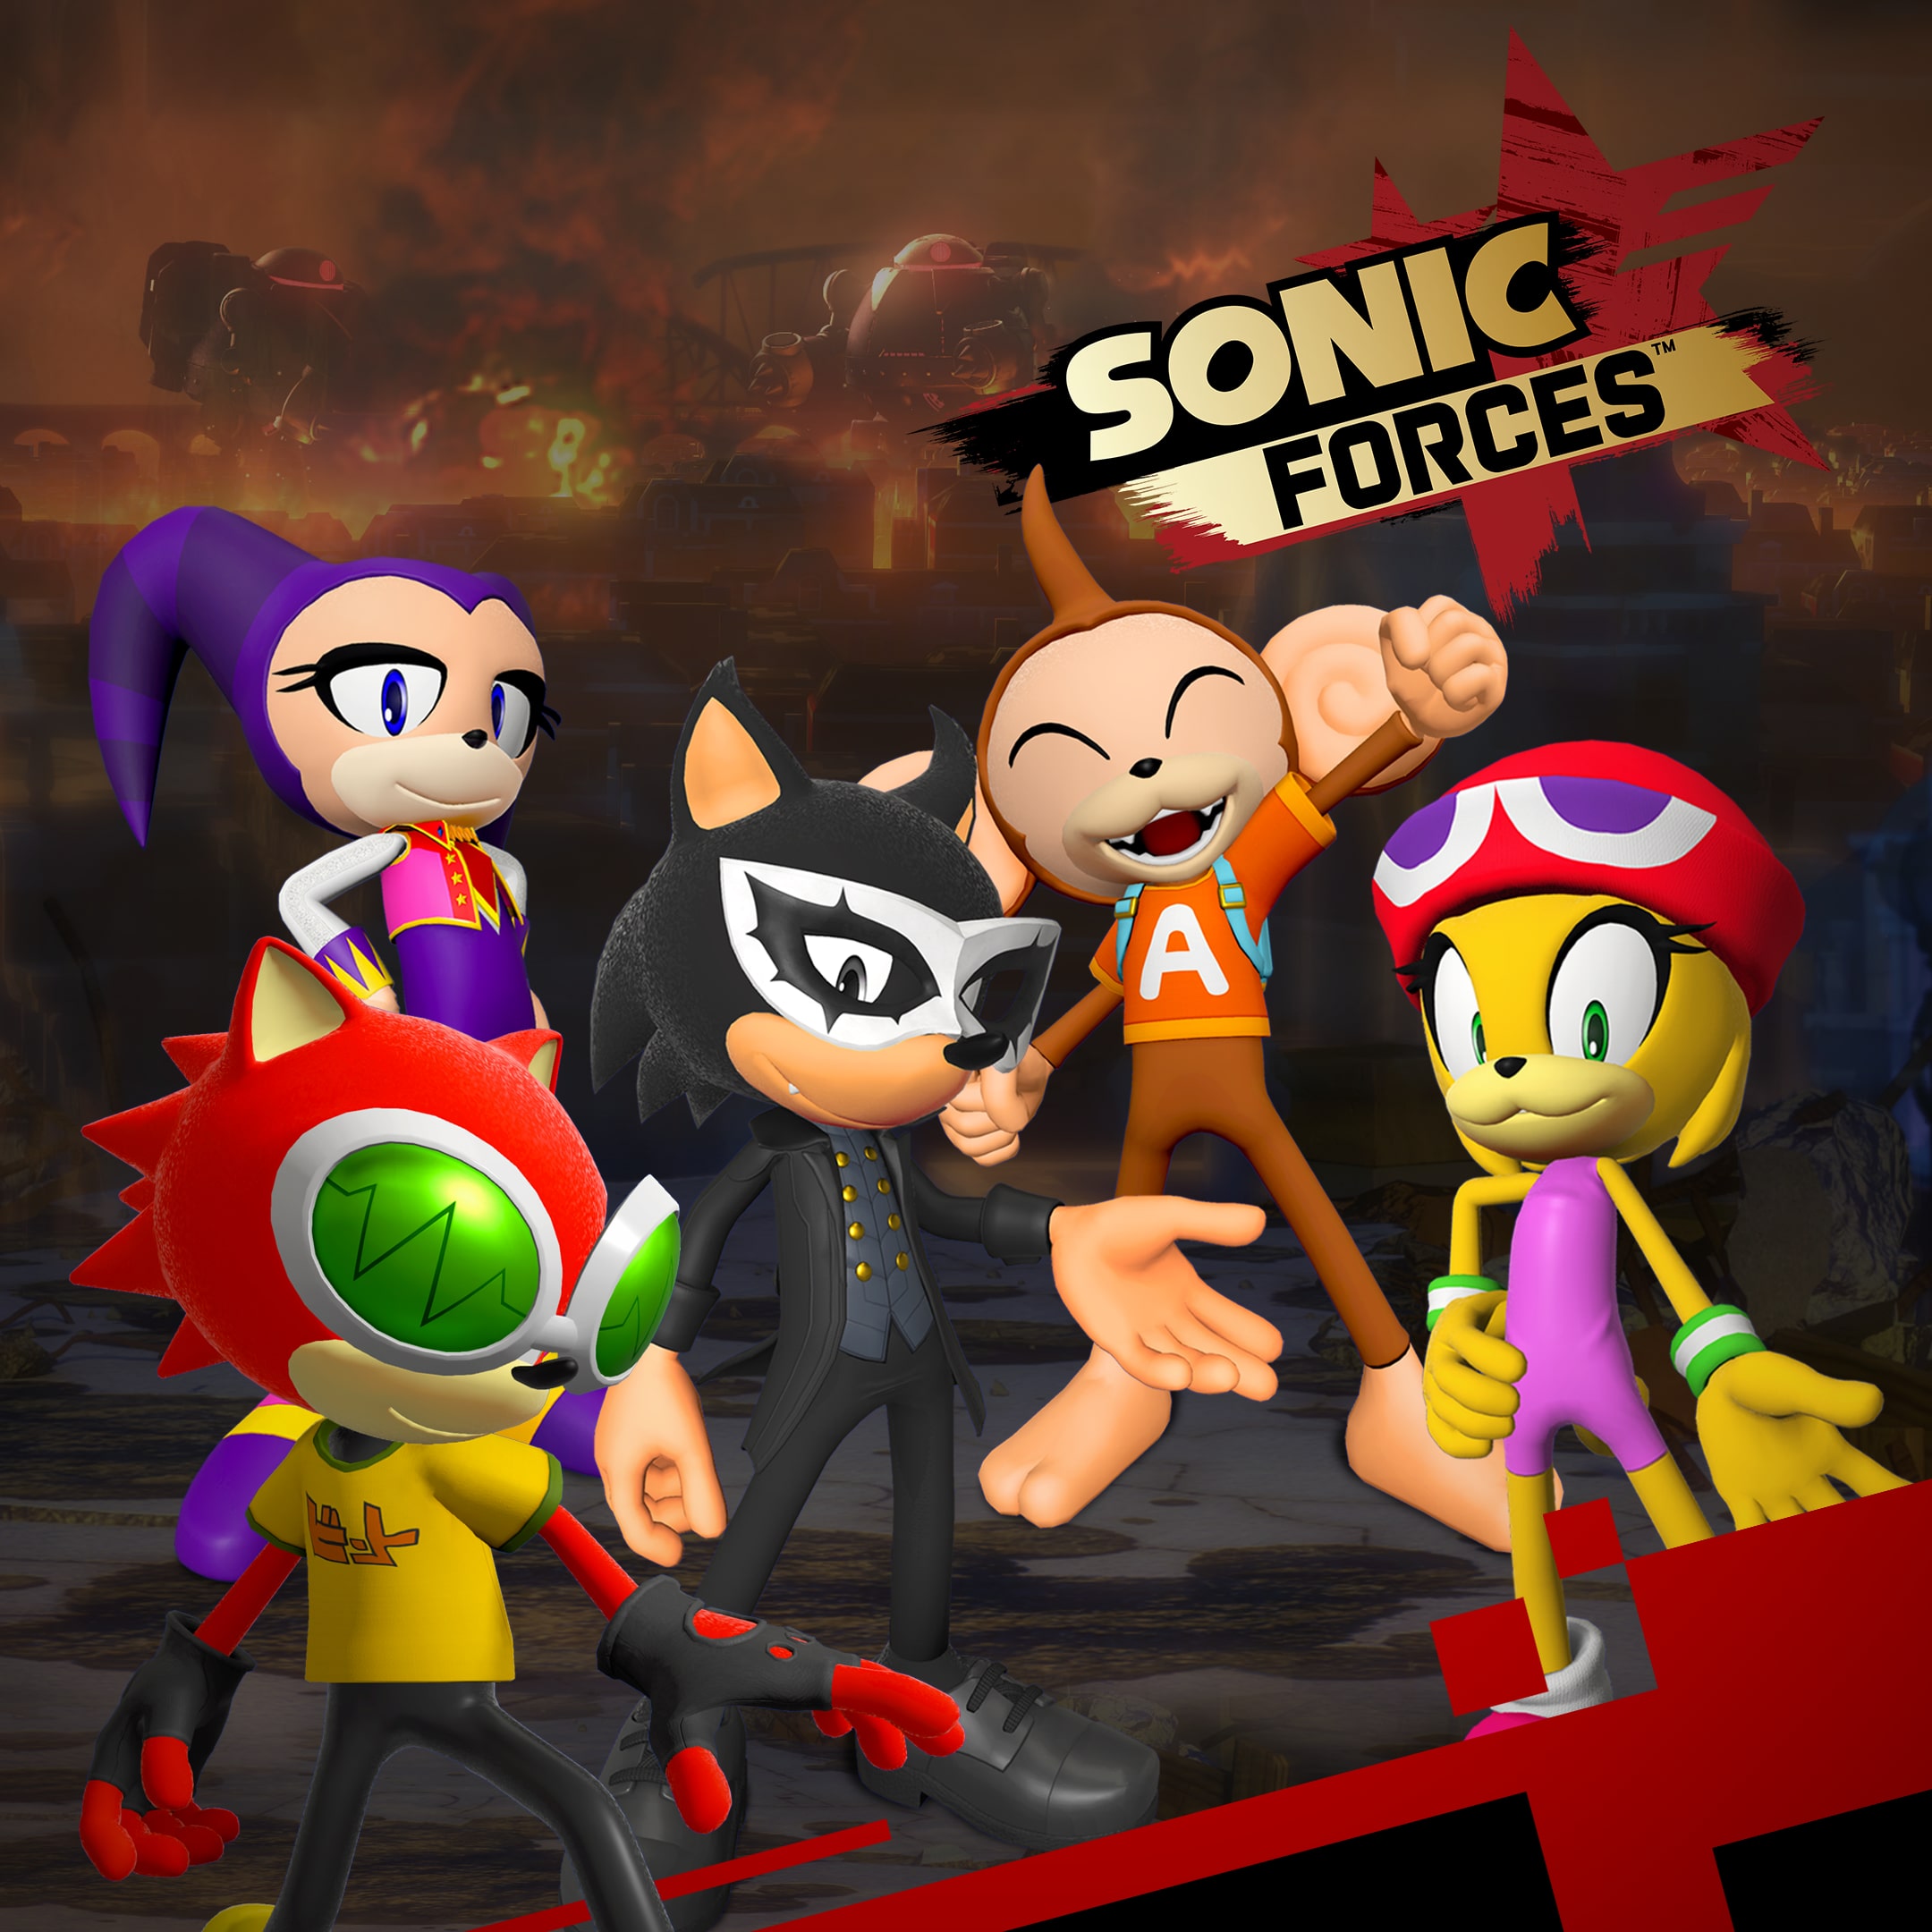 Sonic Forces Bonus Edition - PlayStation 4